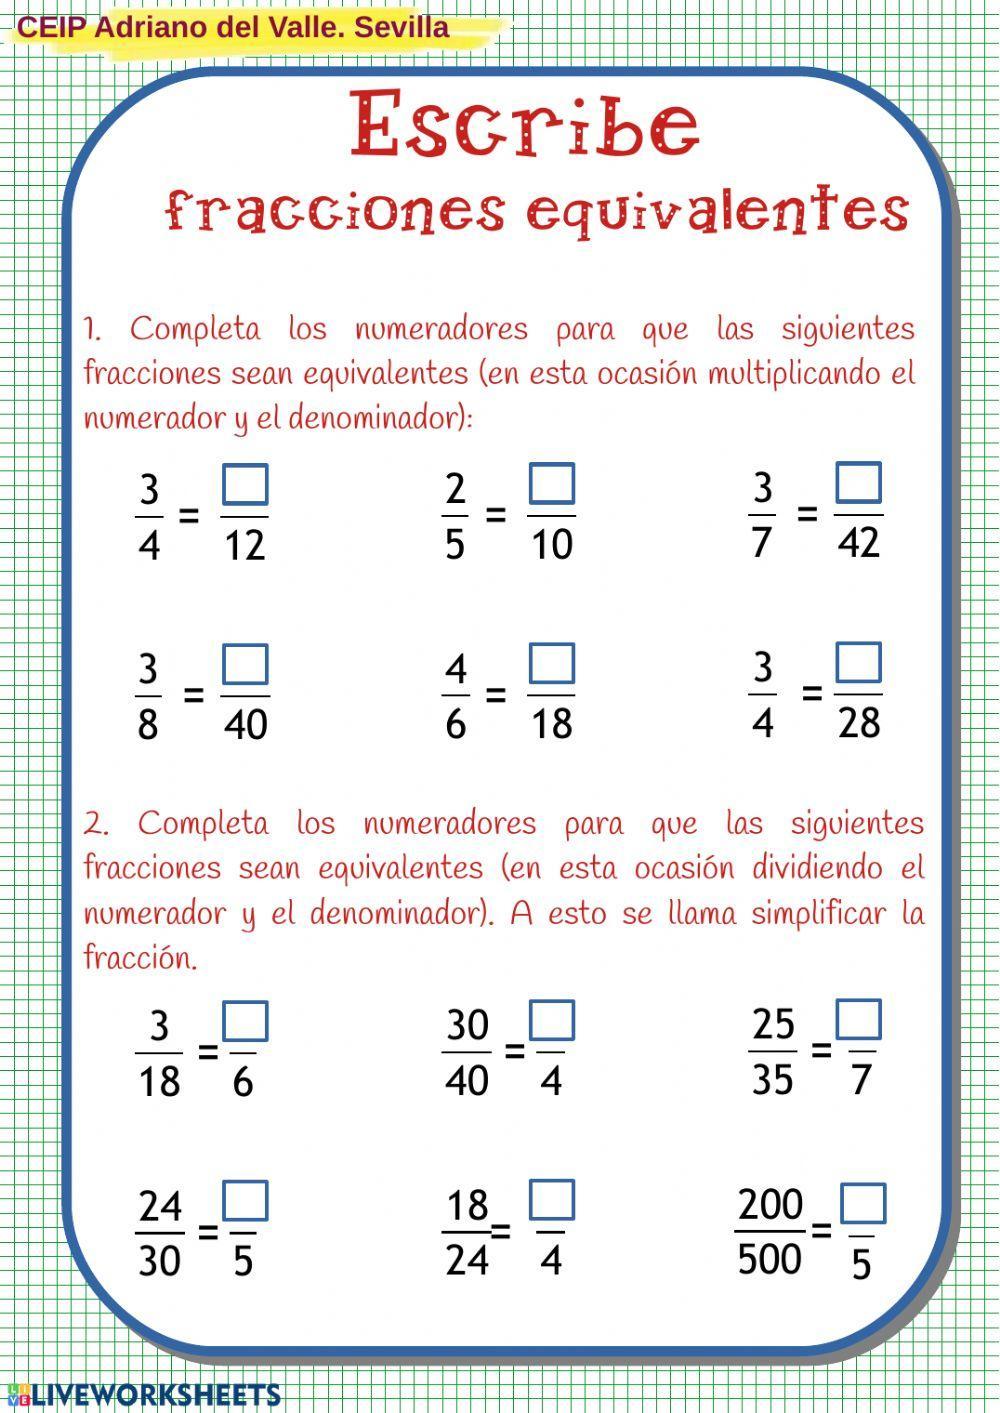 Fracciones equivalentes3